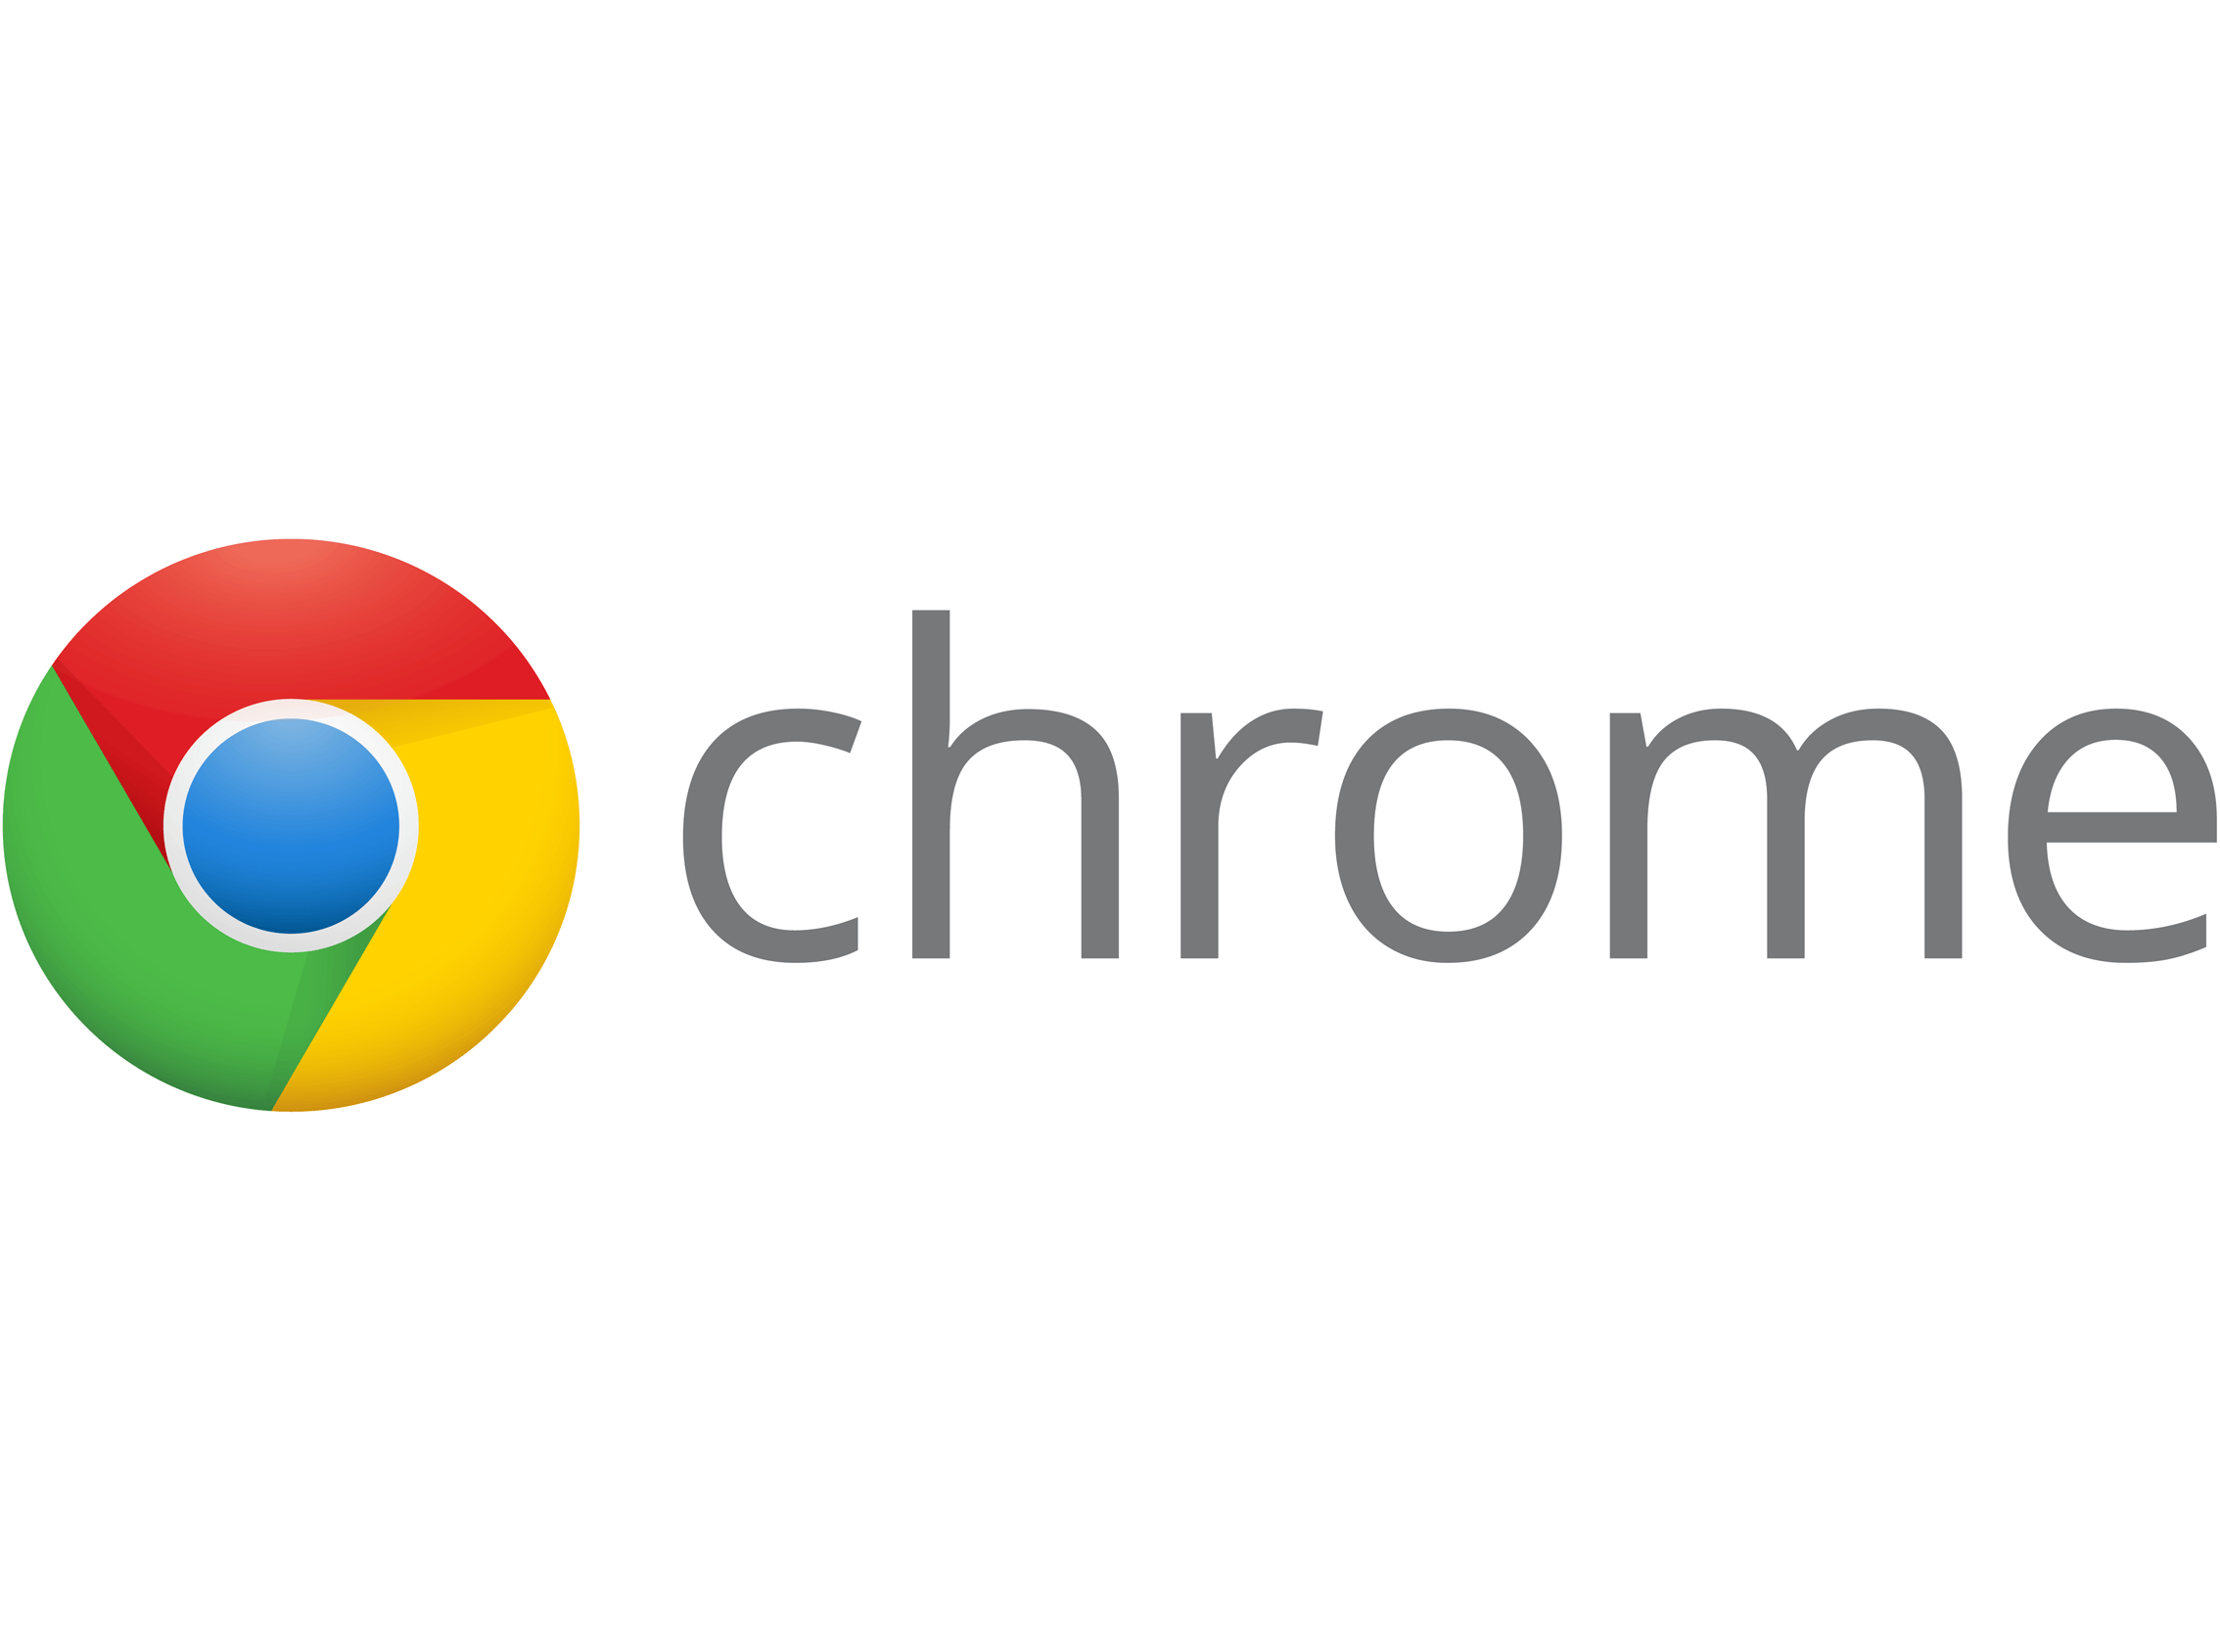 Google Chrome Logo - Chrome logo | Logok